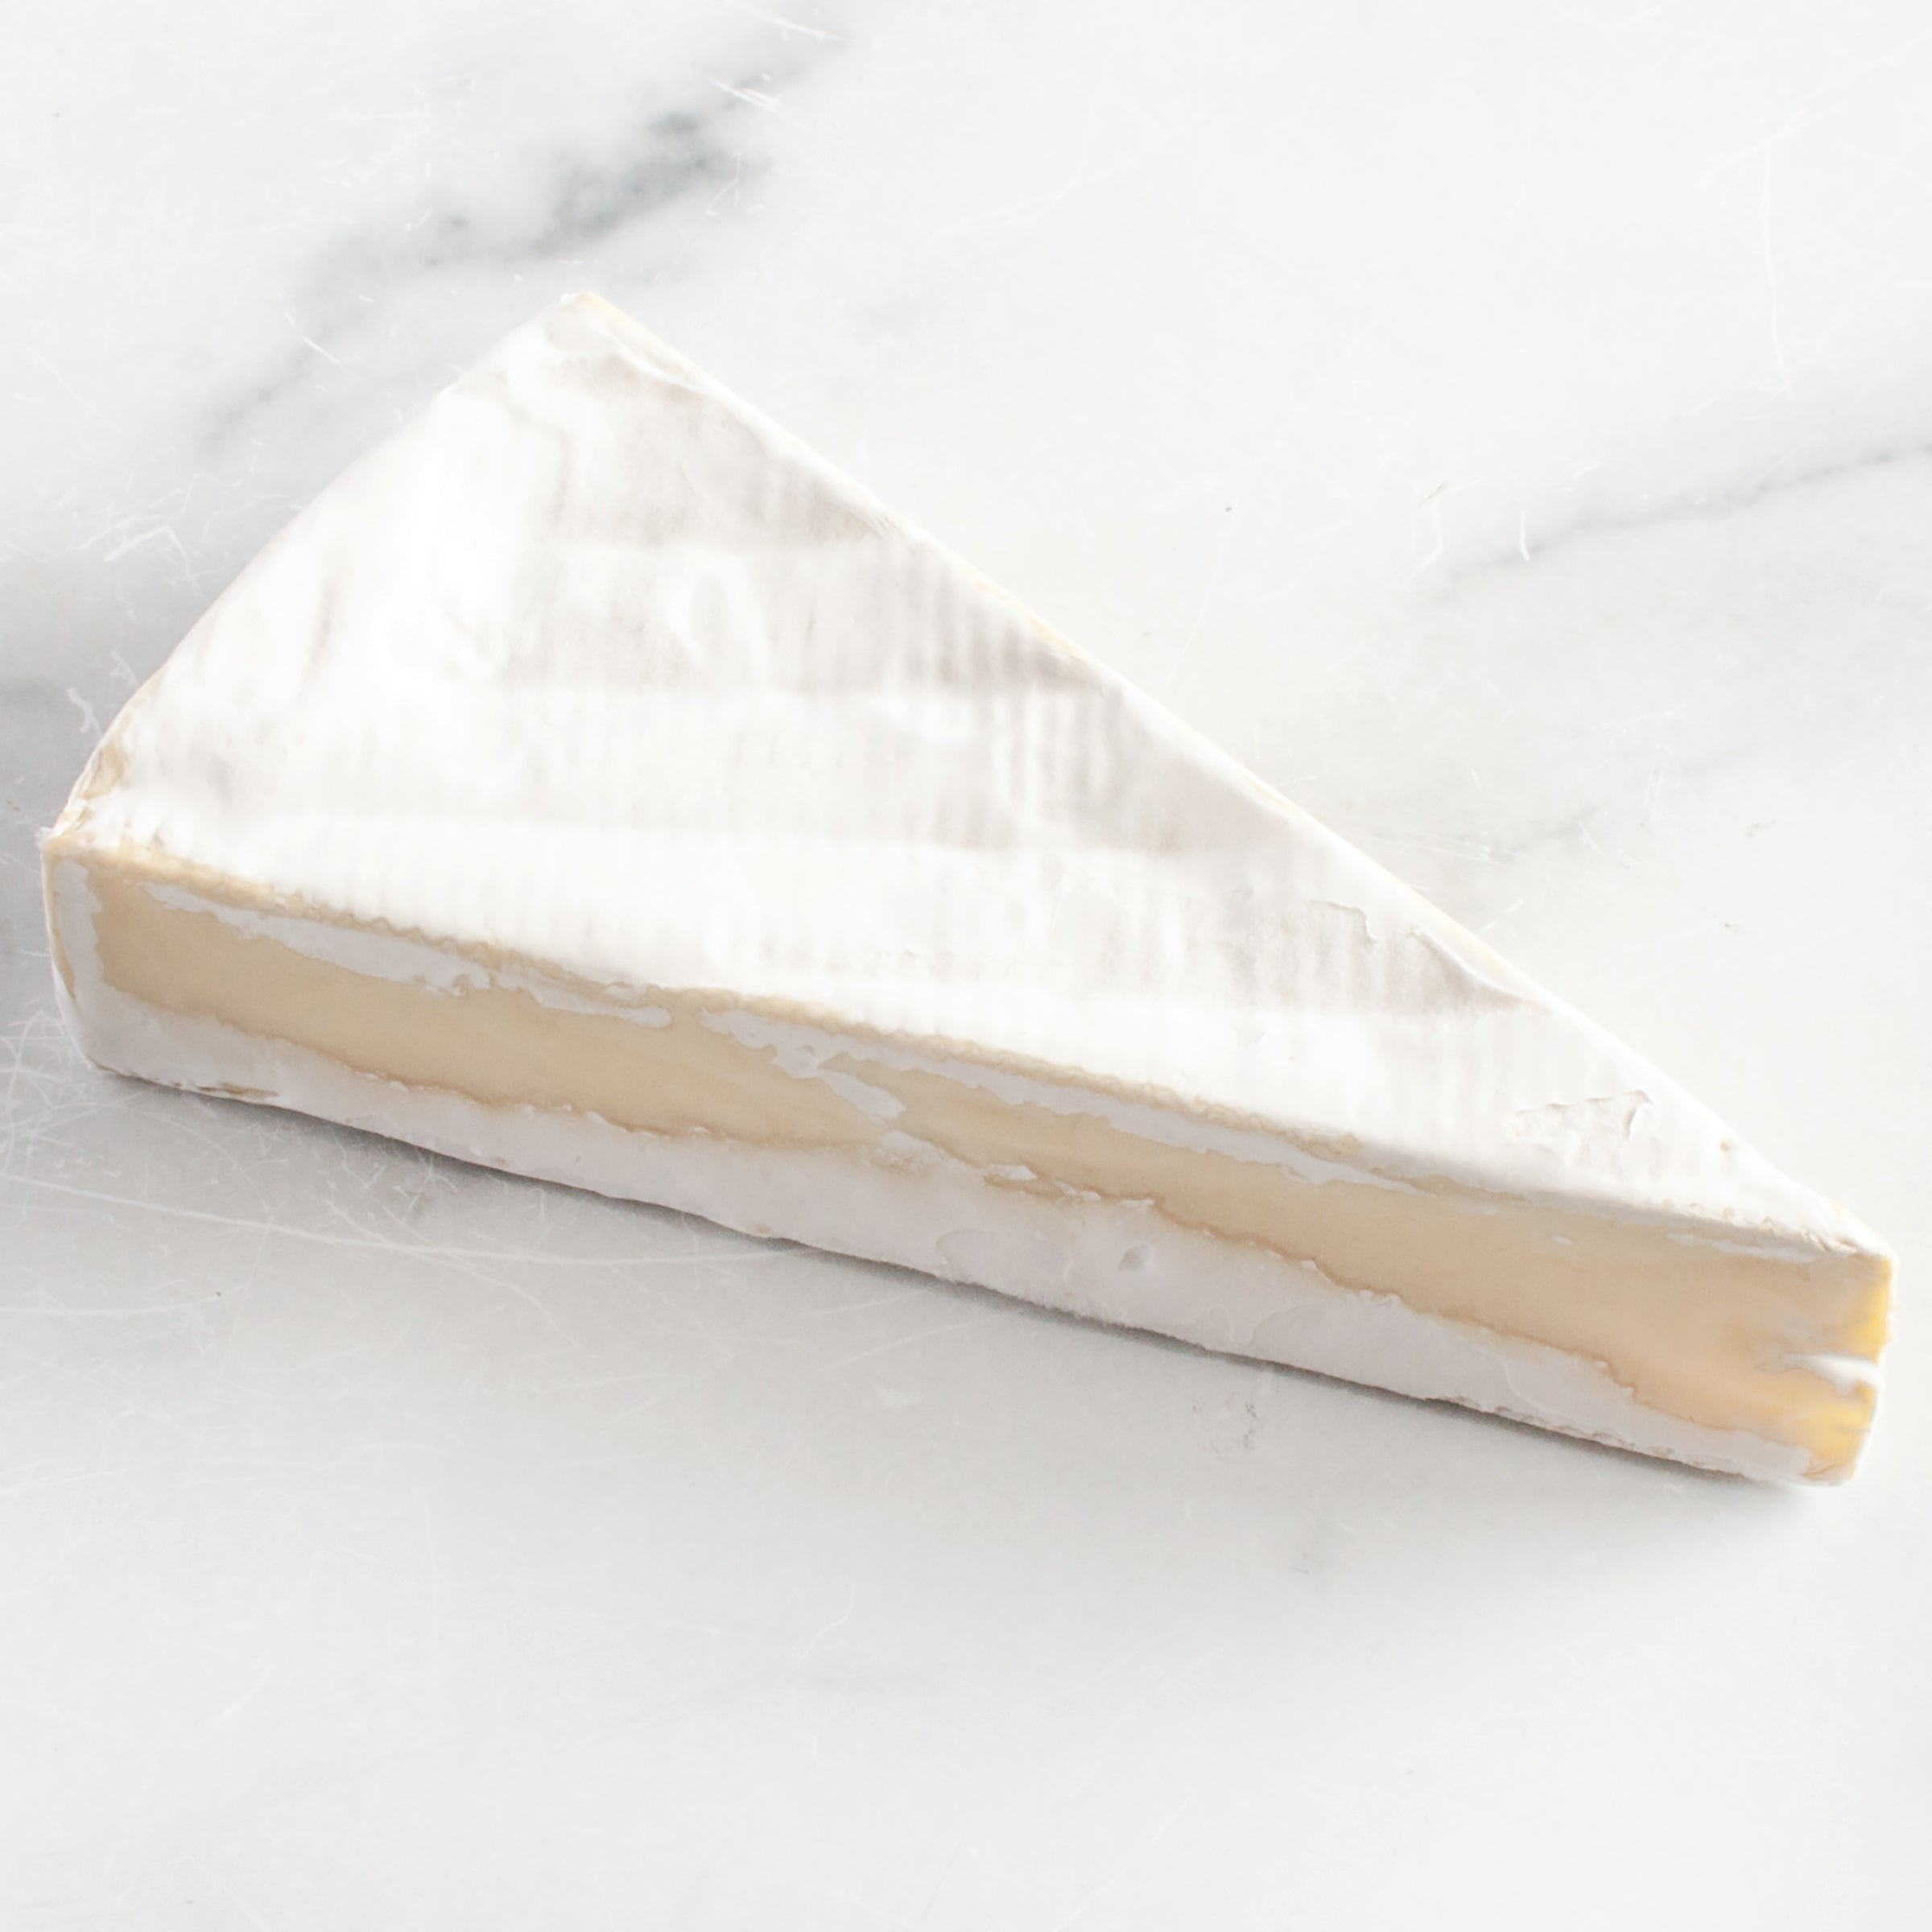 Tour de Paris Brie Cheese Wedge